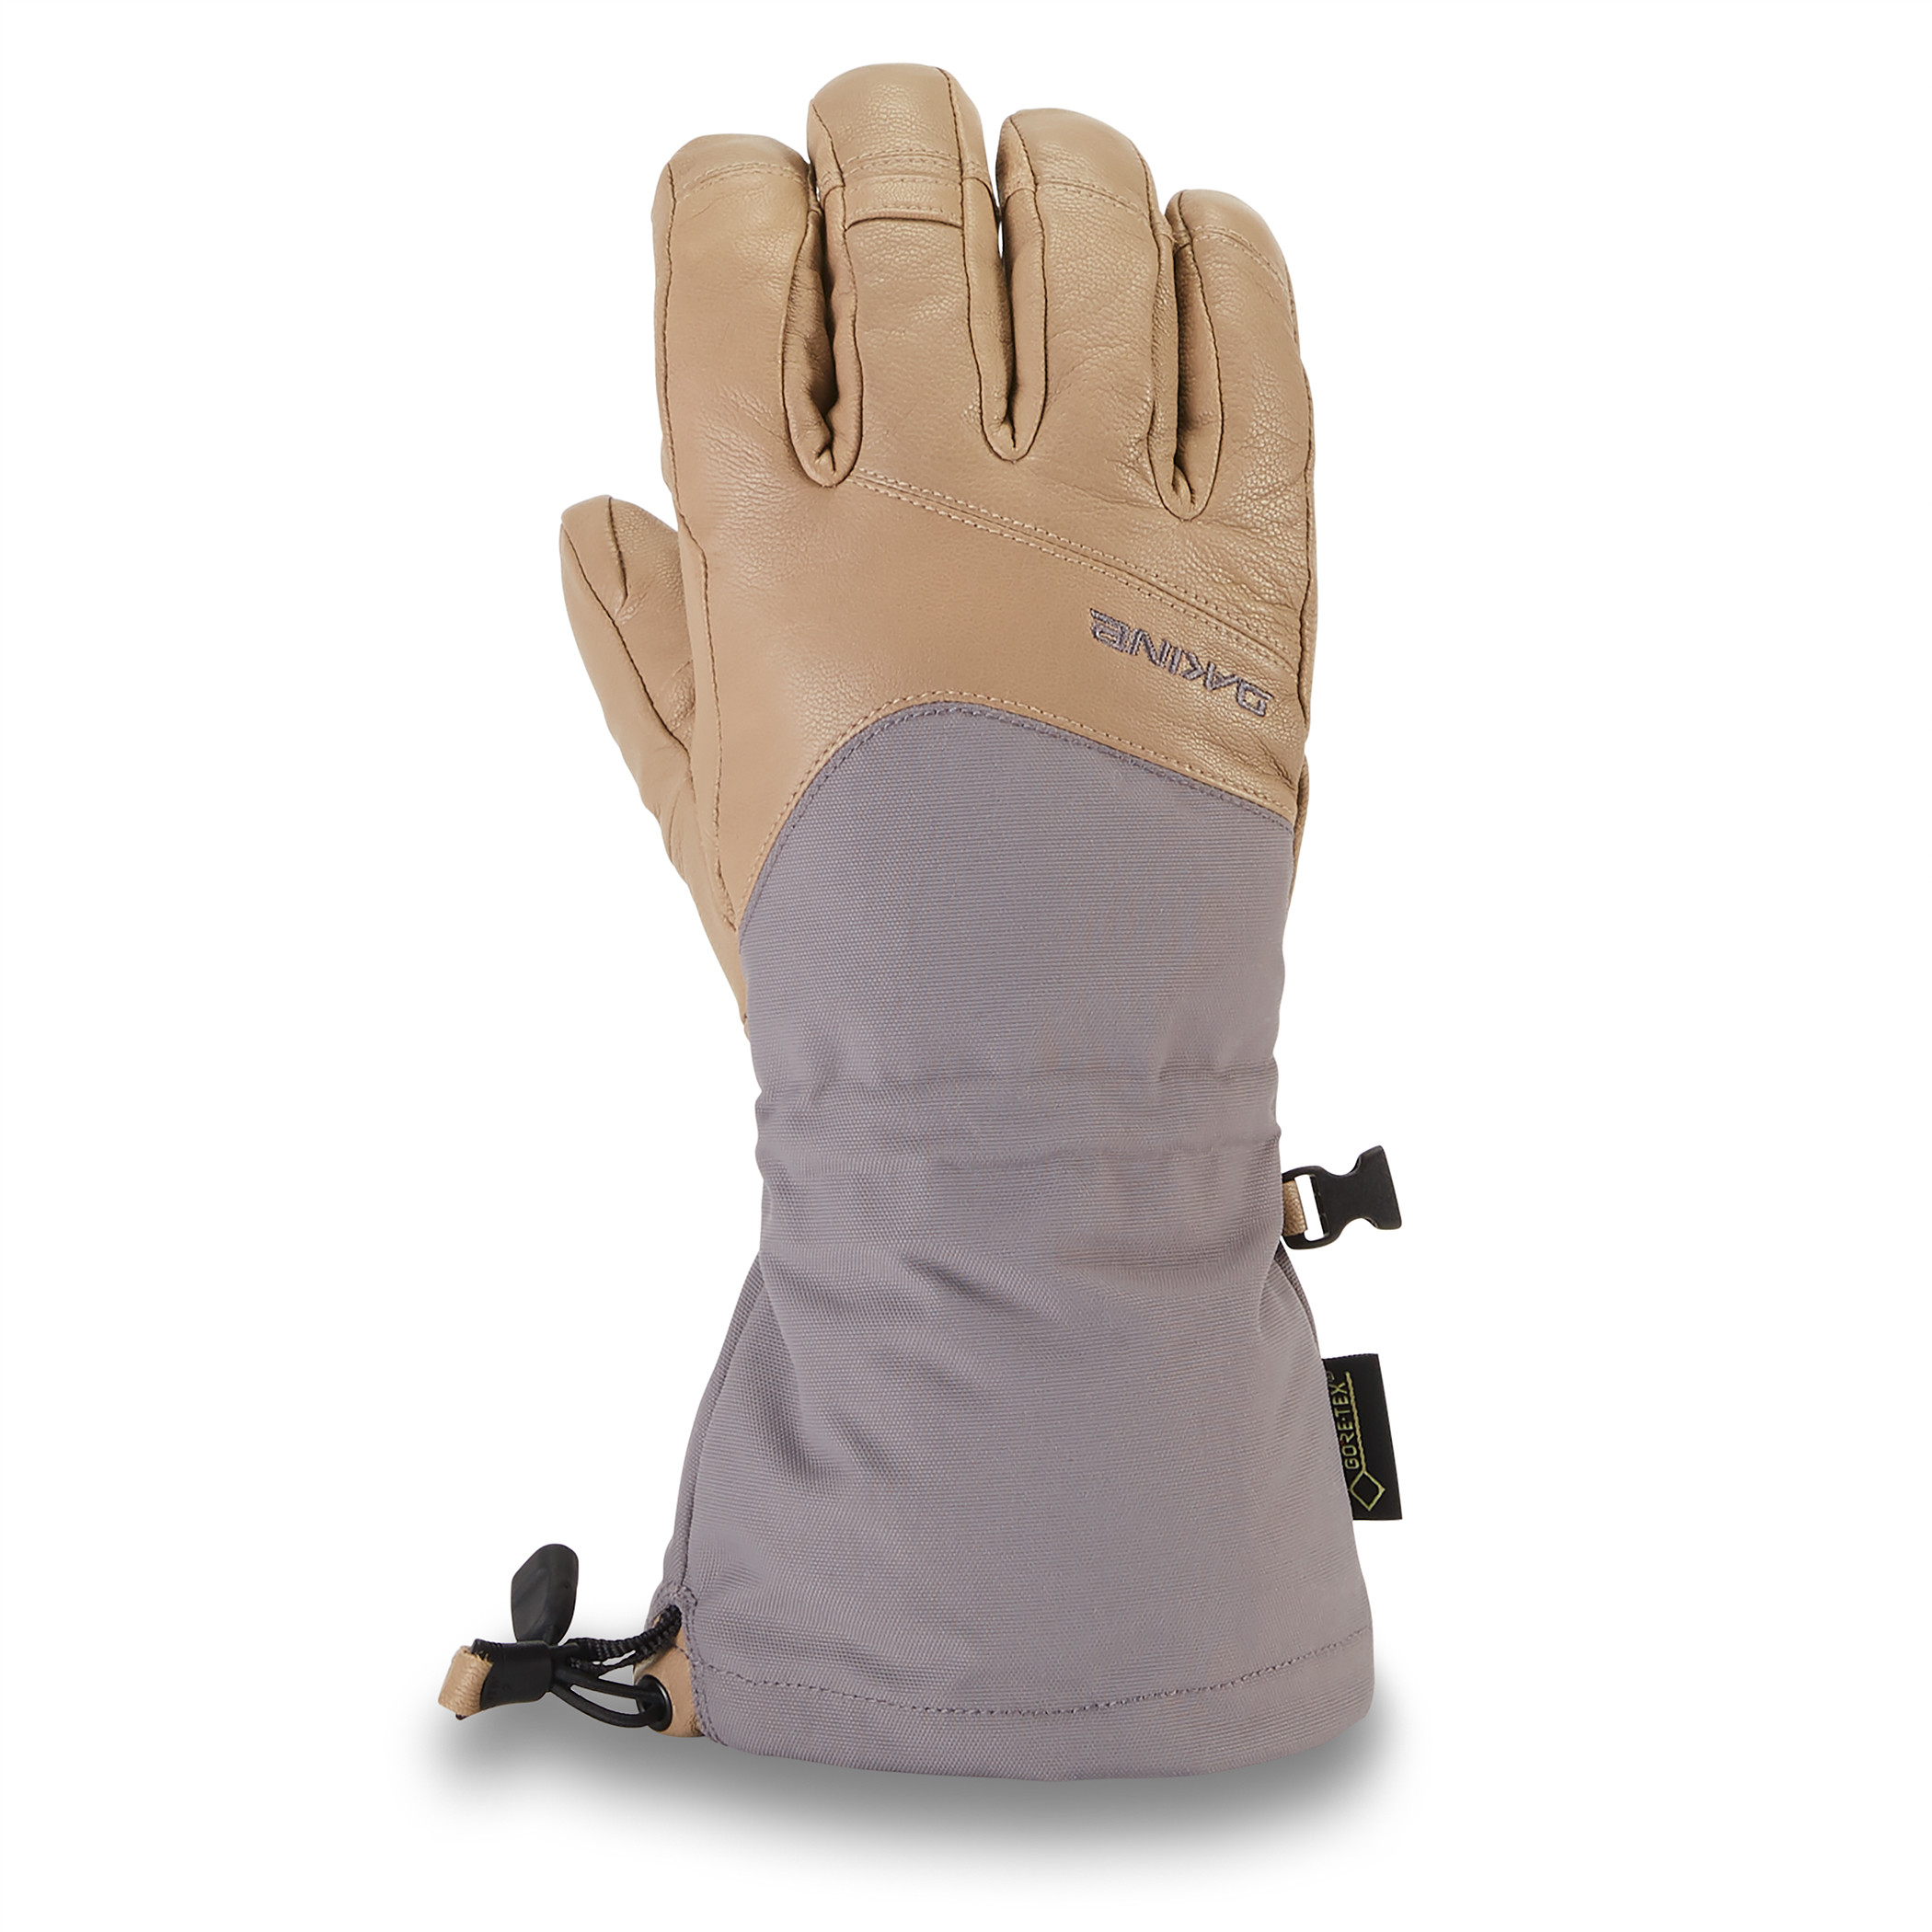 Continental GORE-TEX Glove - Women's